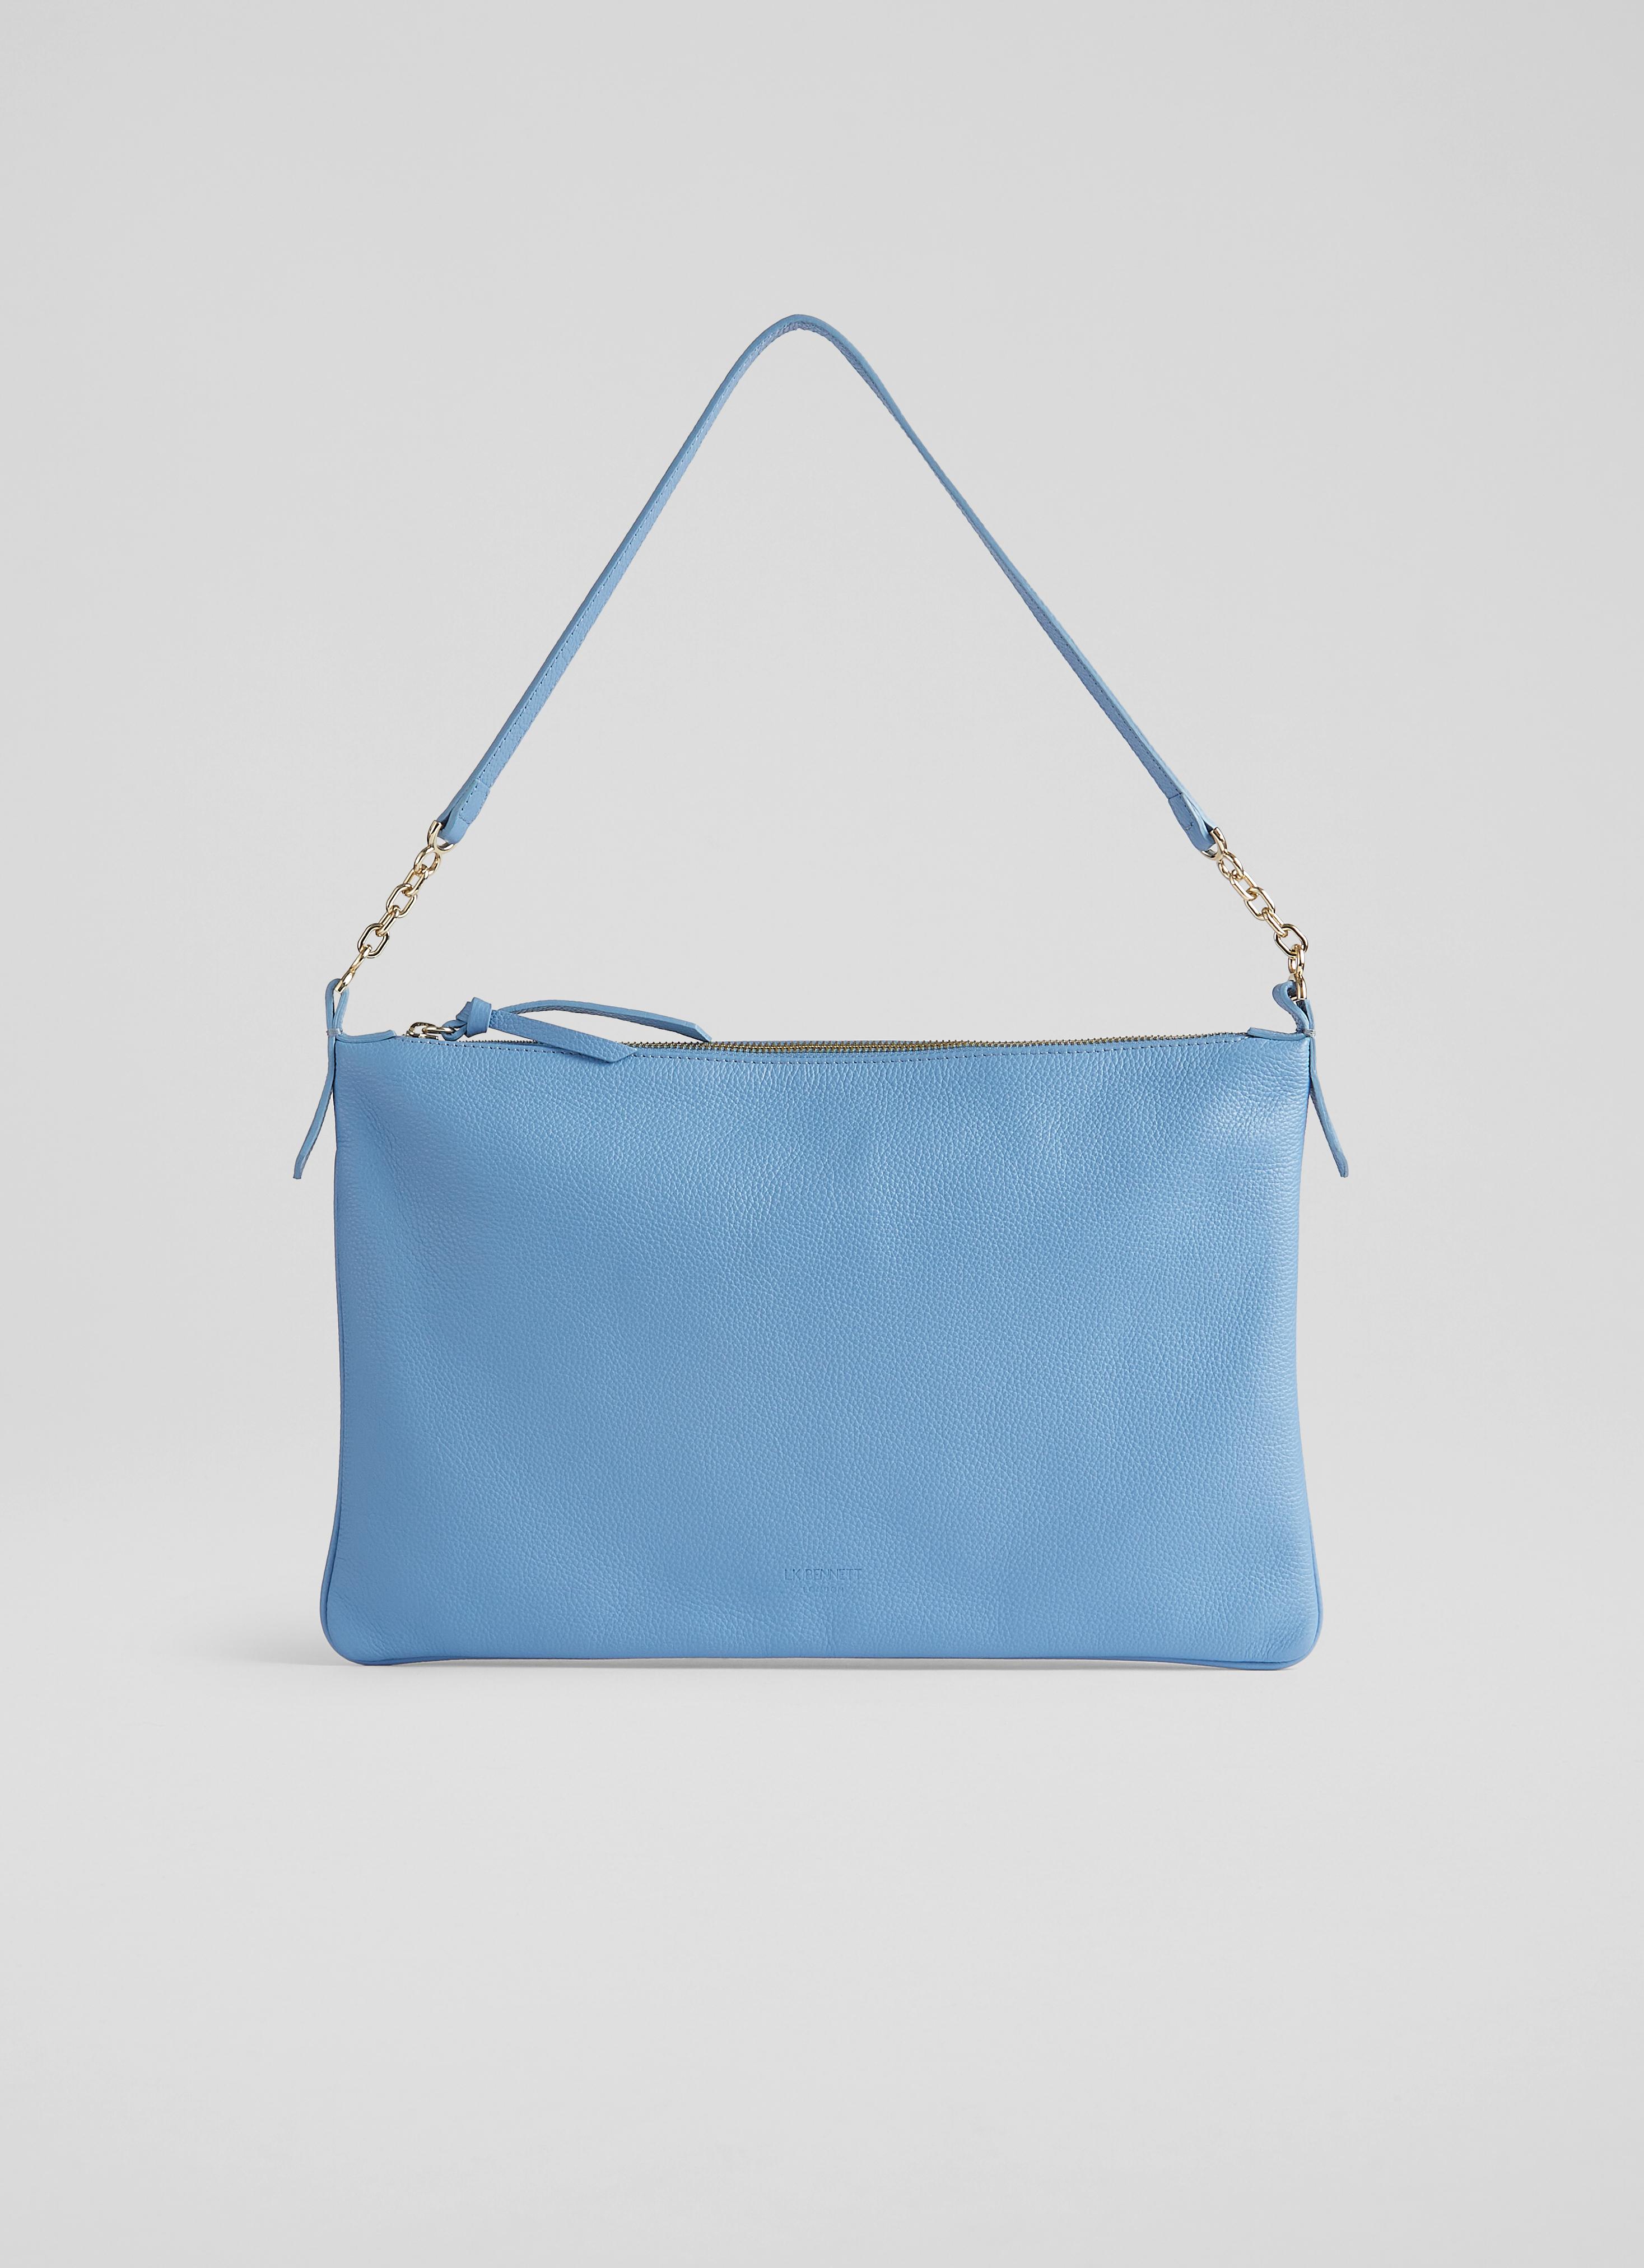 L.K.Bennett Rachel Blue Leather Slim Shoulder Bag, Dusty Blu